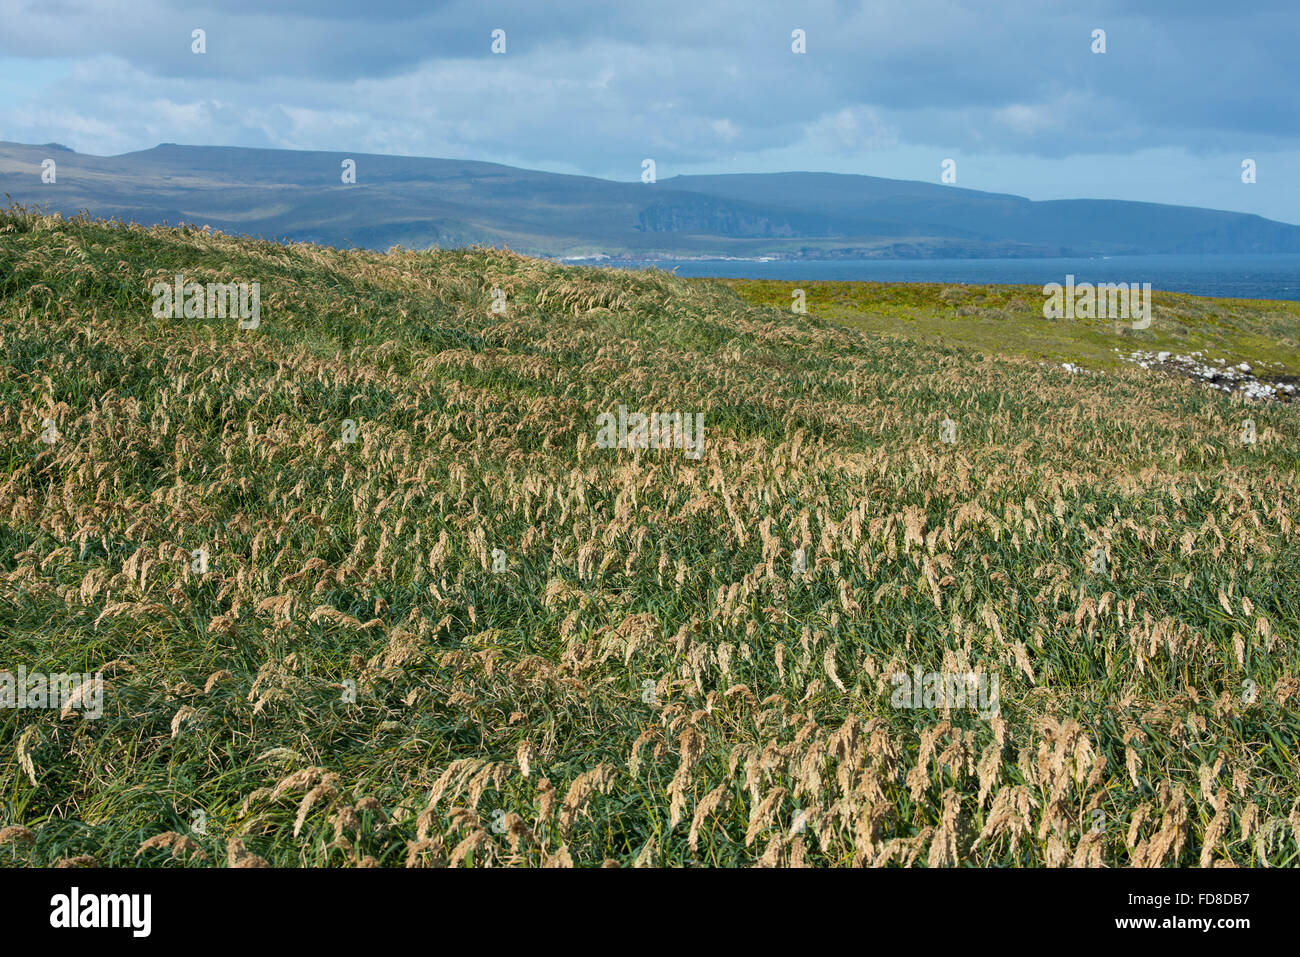 Neuseeland, Auckland-Inseln, unbewohnte Inselgruppe im Südpazifik, Enderby Insel. Tussac Grass (Poa Litorosa). Stockfoto